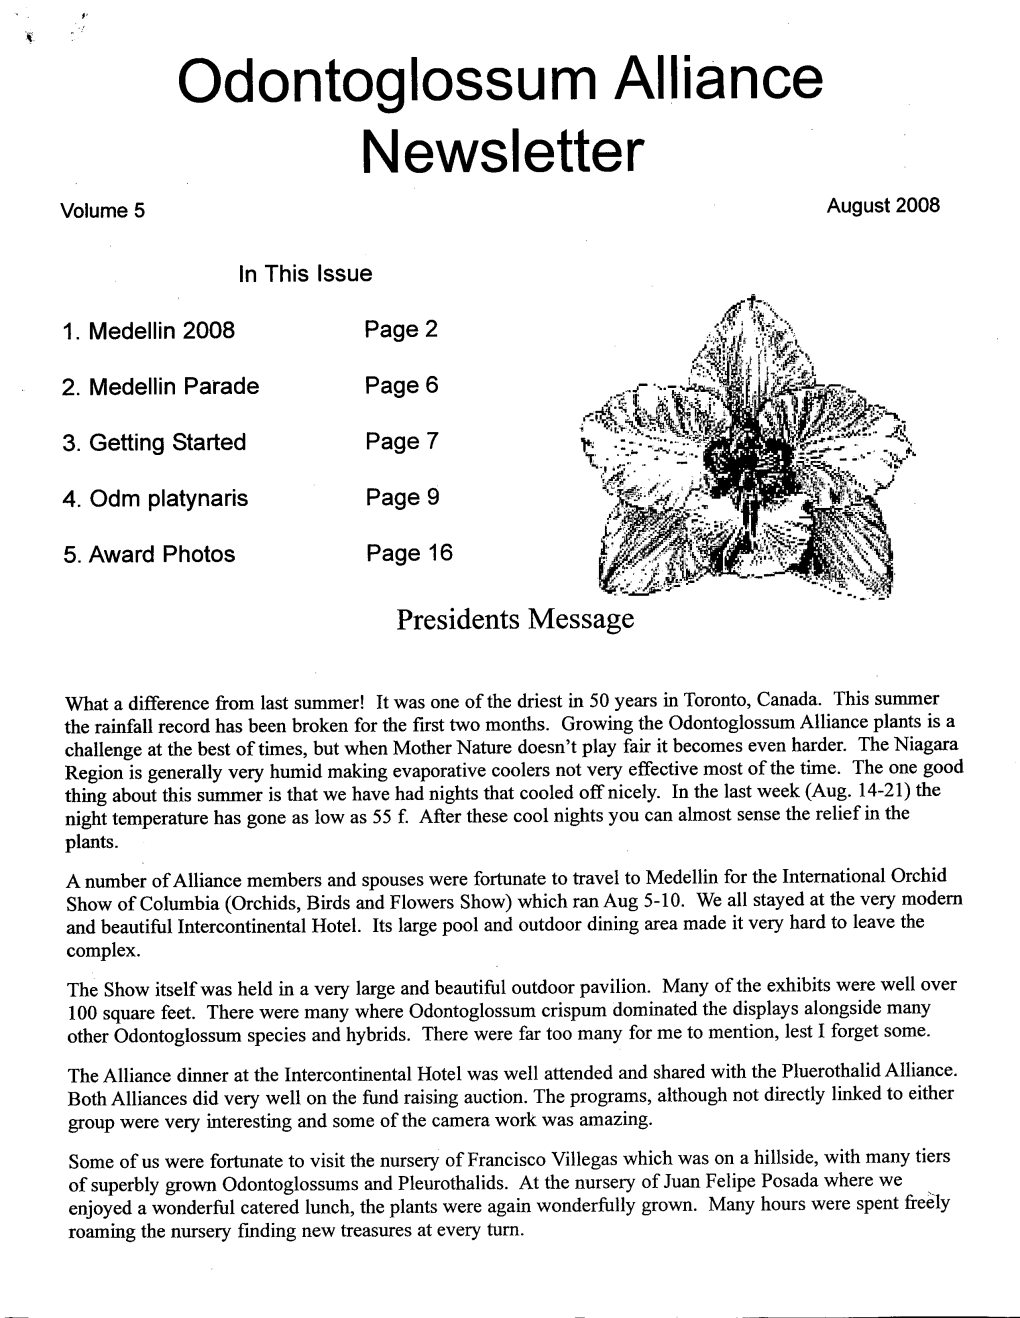 August 2008 Newsletter